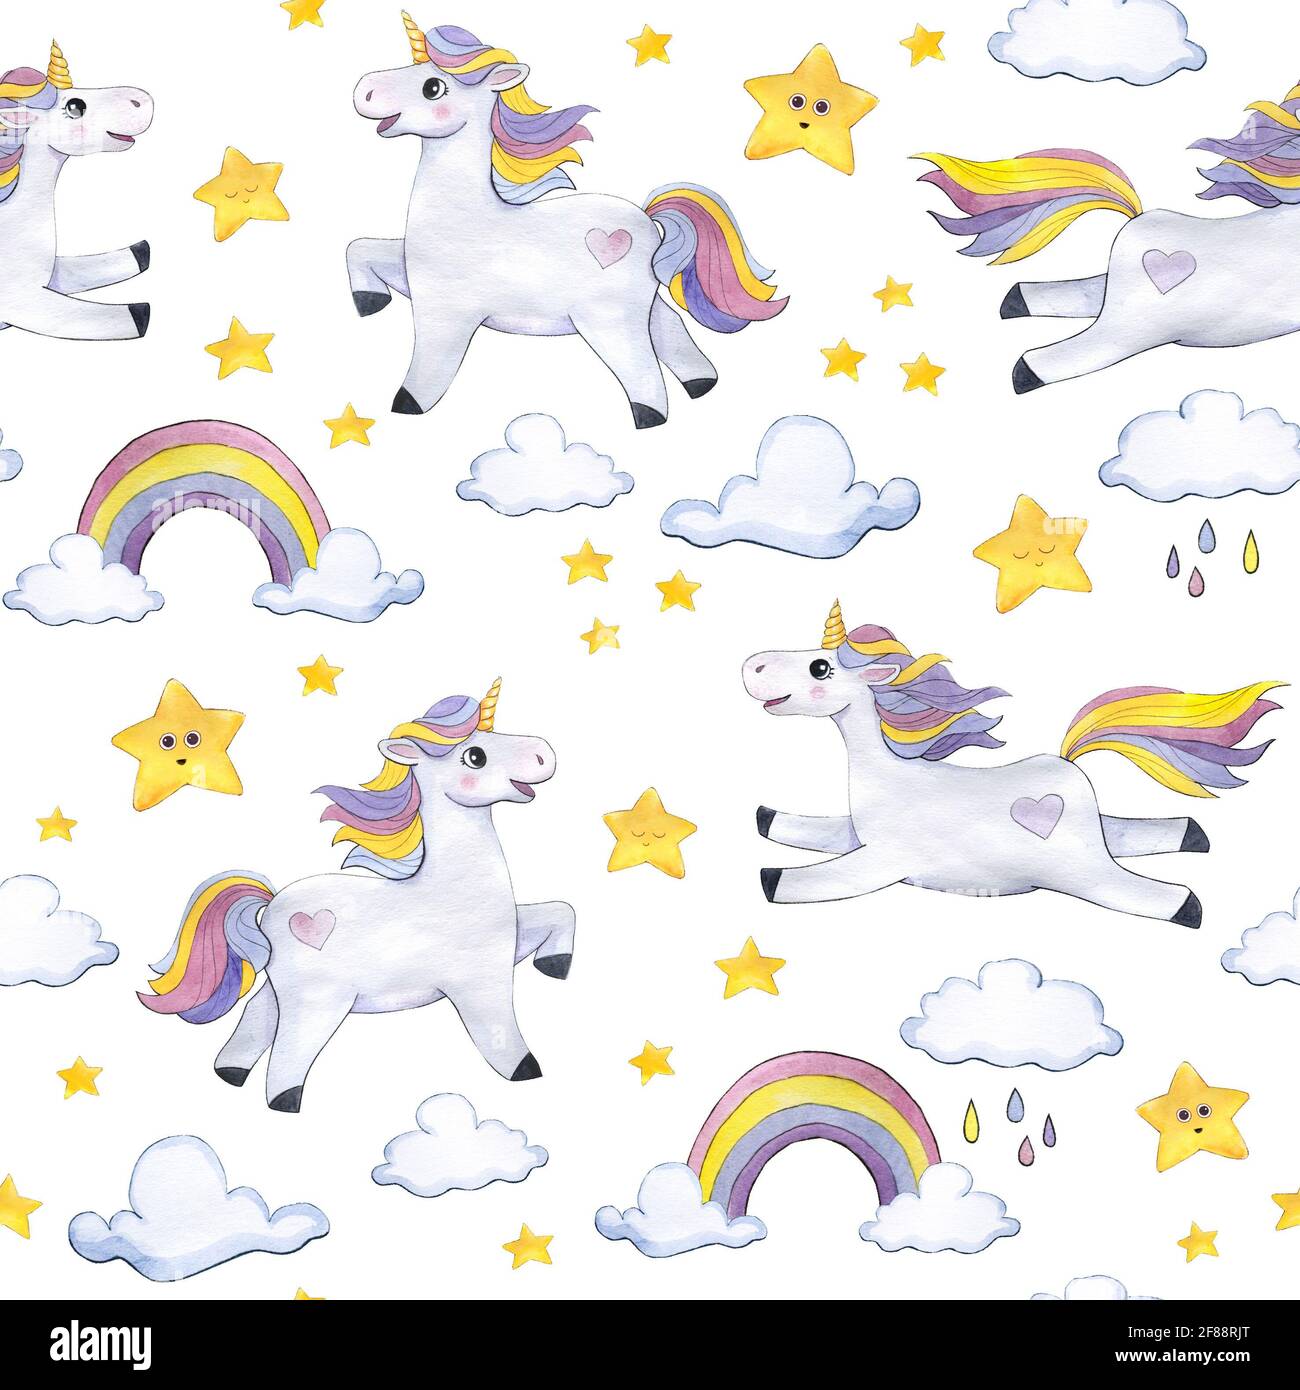 unicorns and rainbows desktop